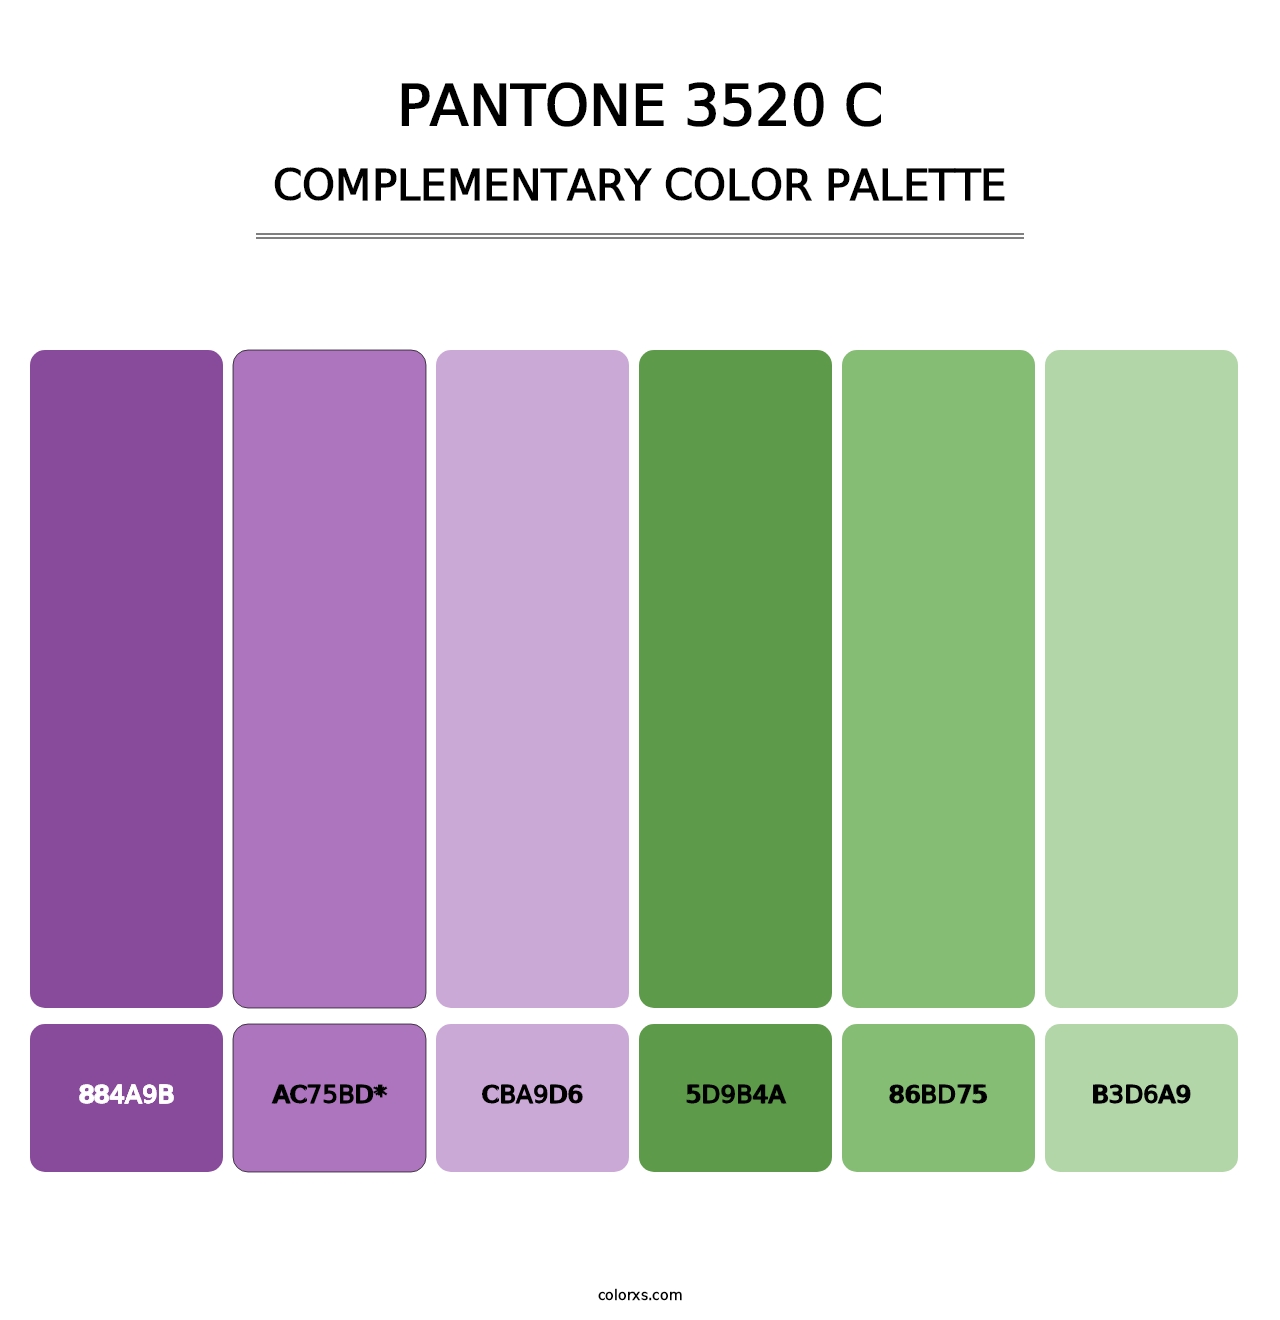 PANTONE 3520 C - Complementary Color Palette